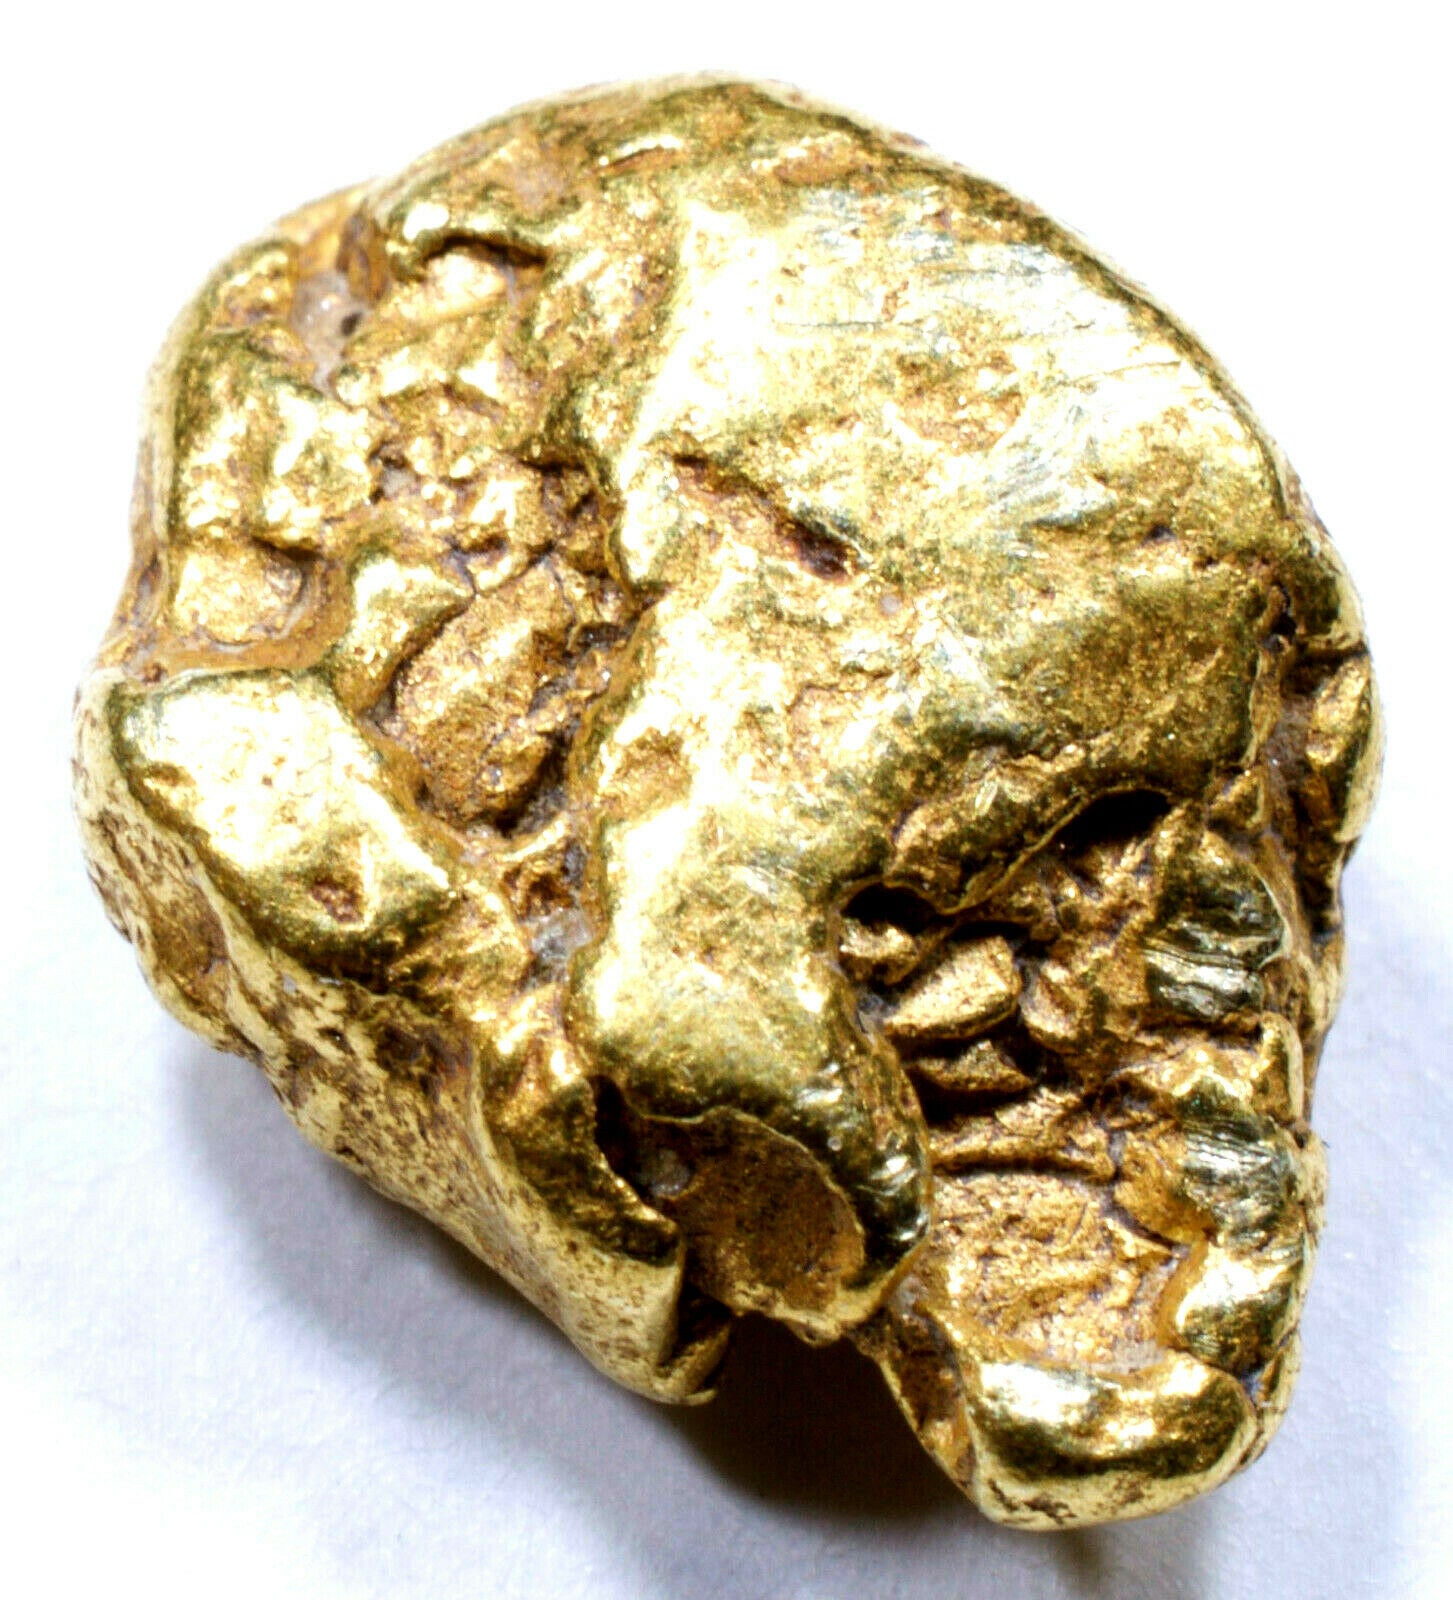 2.031 GRAMS ALASKAN NATURAL PURE GOLD NUGGET GENUINE (#N208) - Liquidbullion